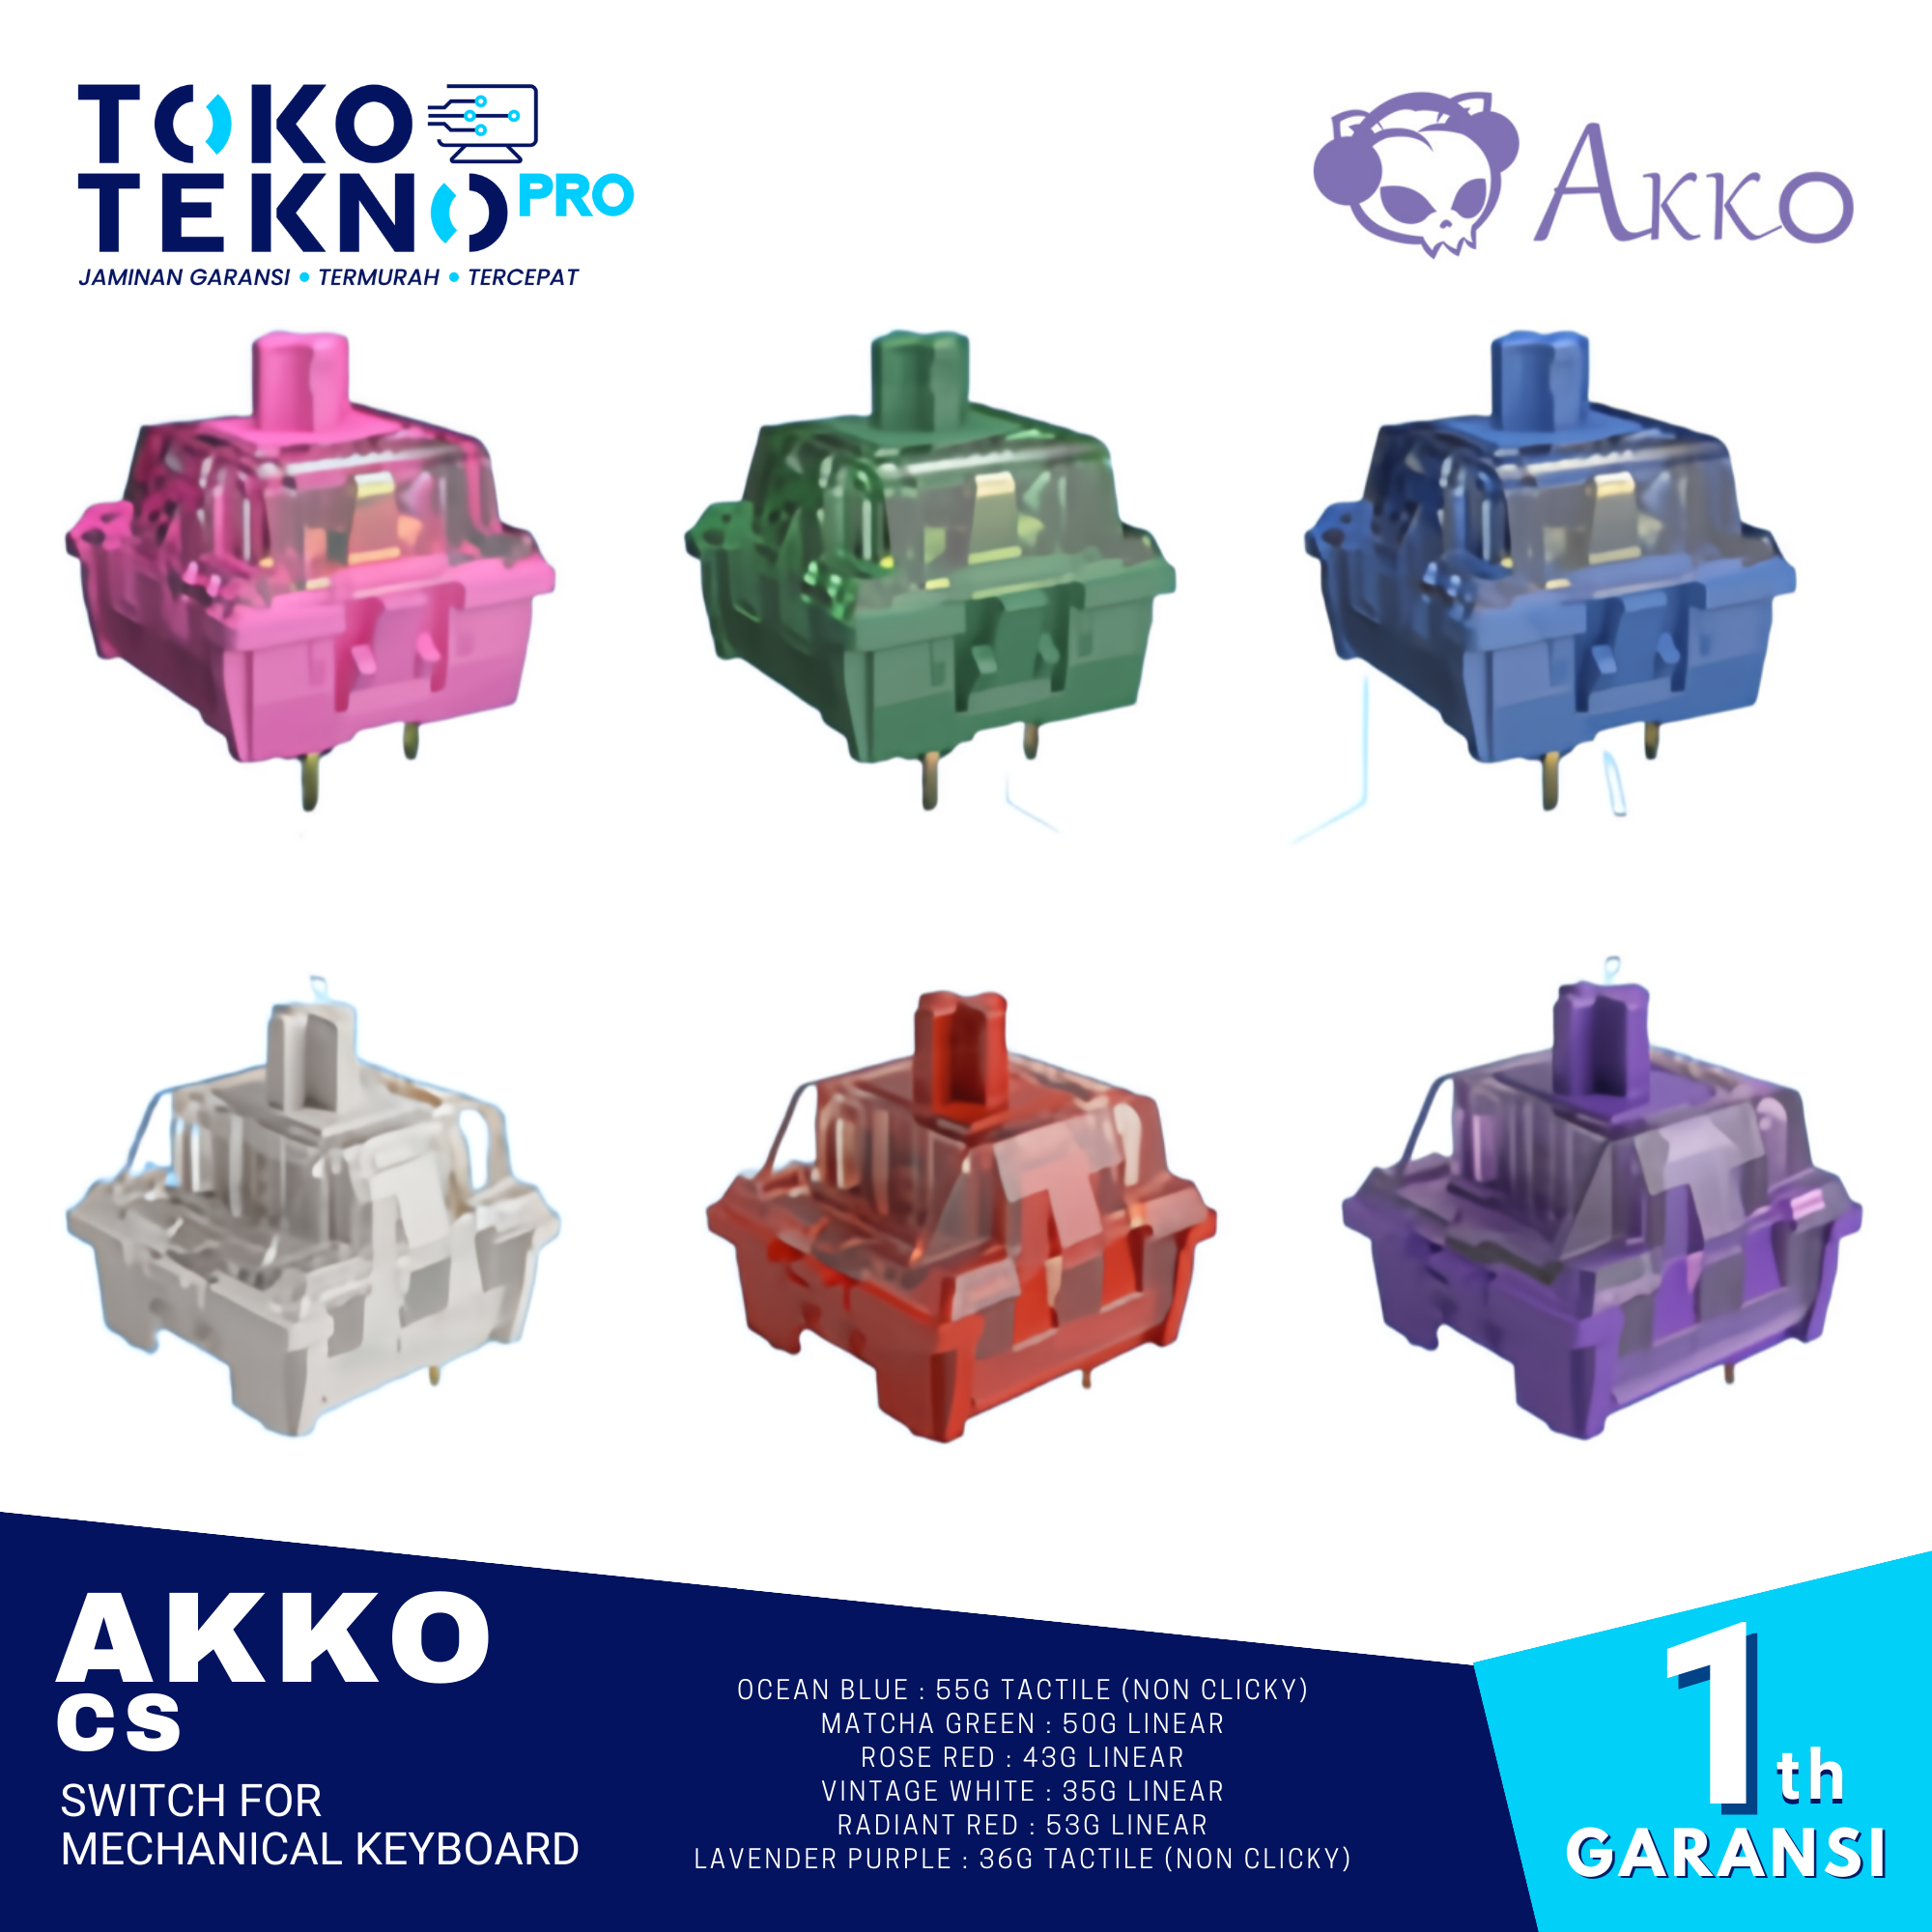 Akko CS Switch For Mechanical Keyboard